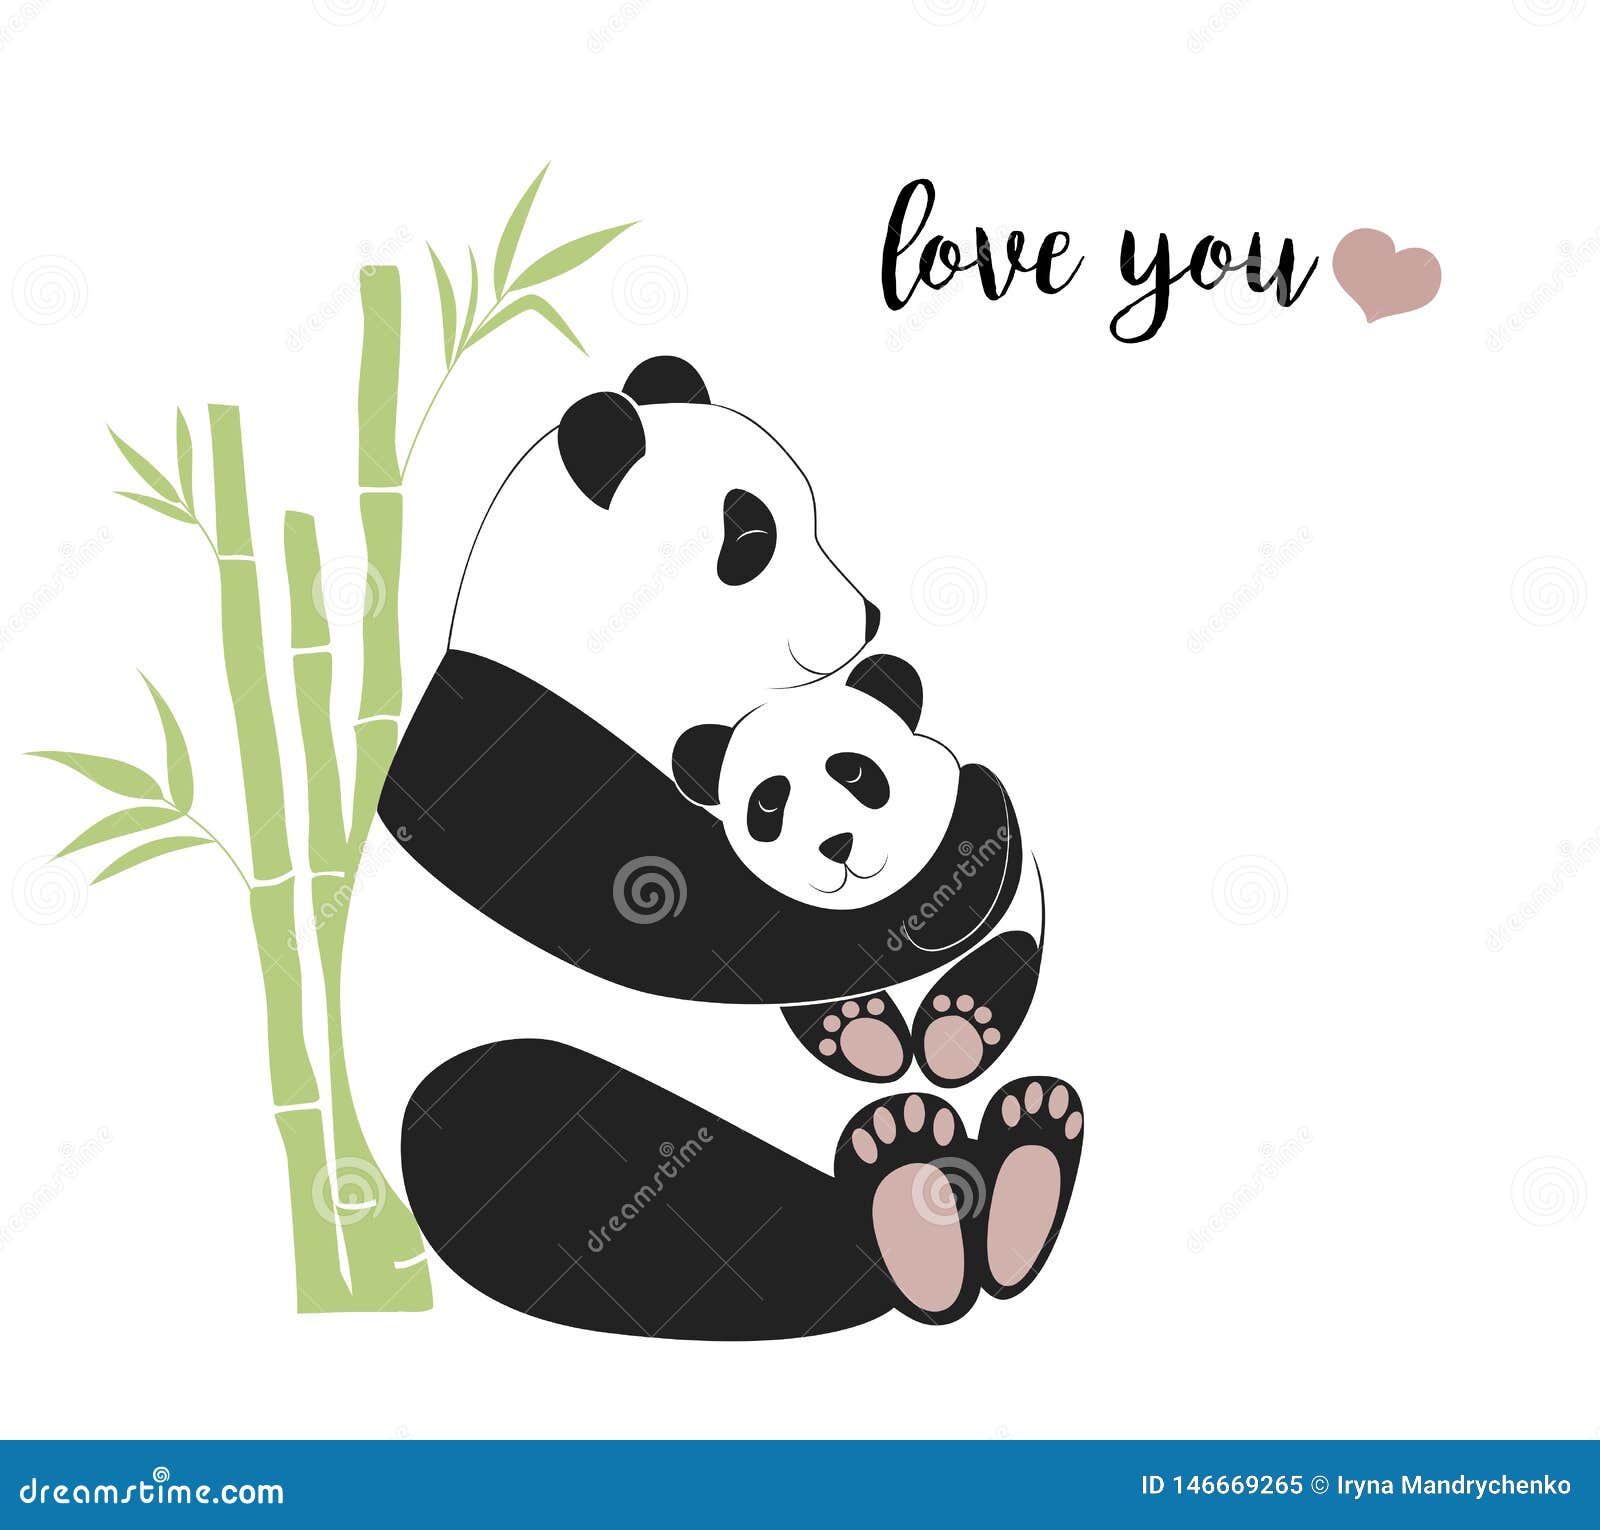 Cute Baby Panda Hand drawn Illustration